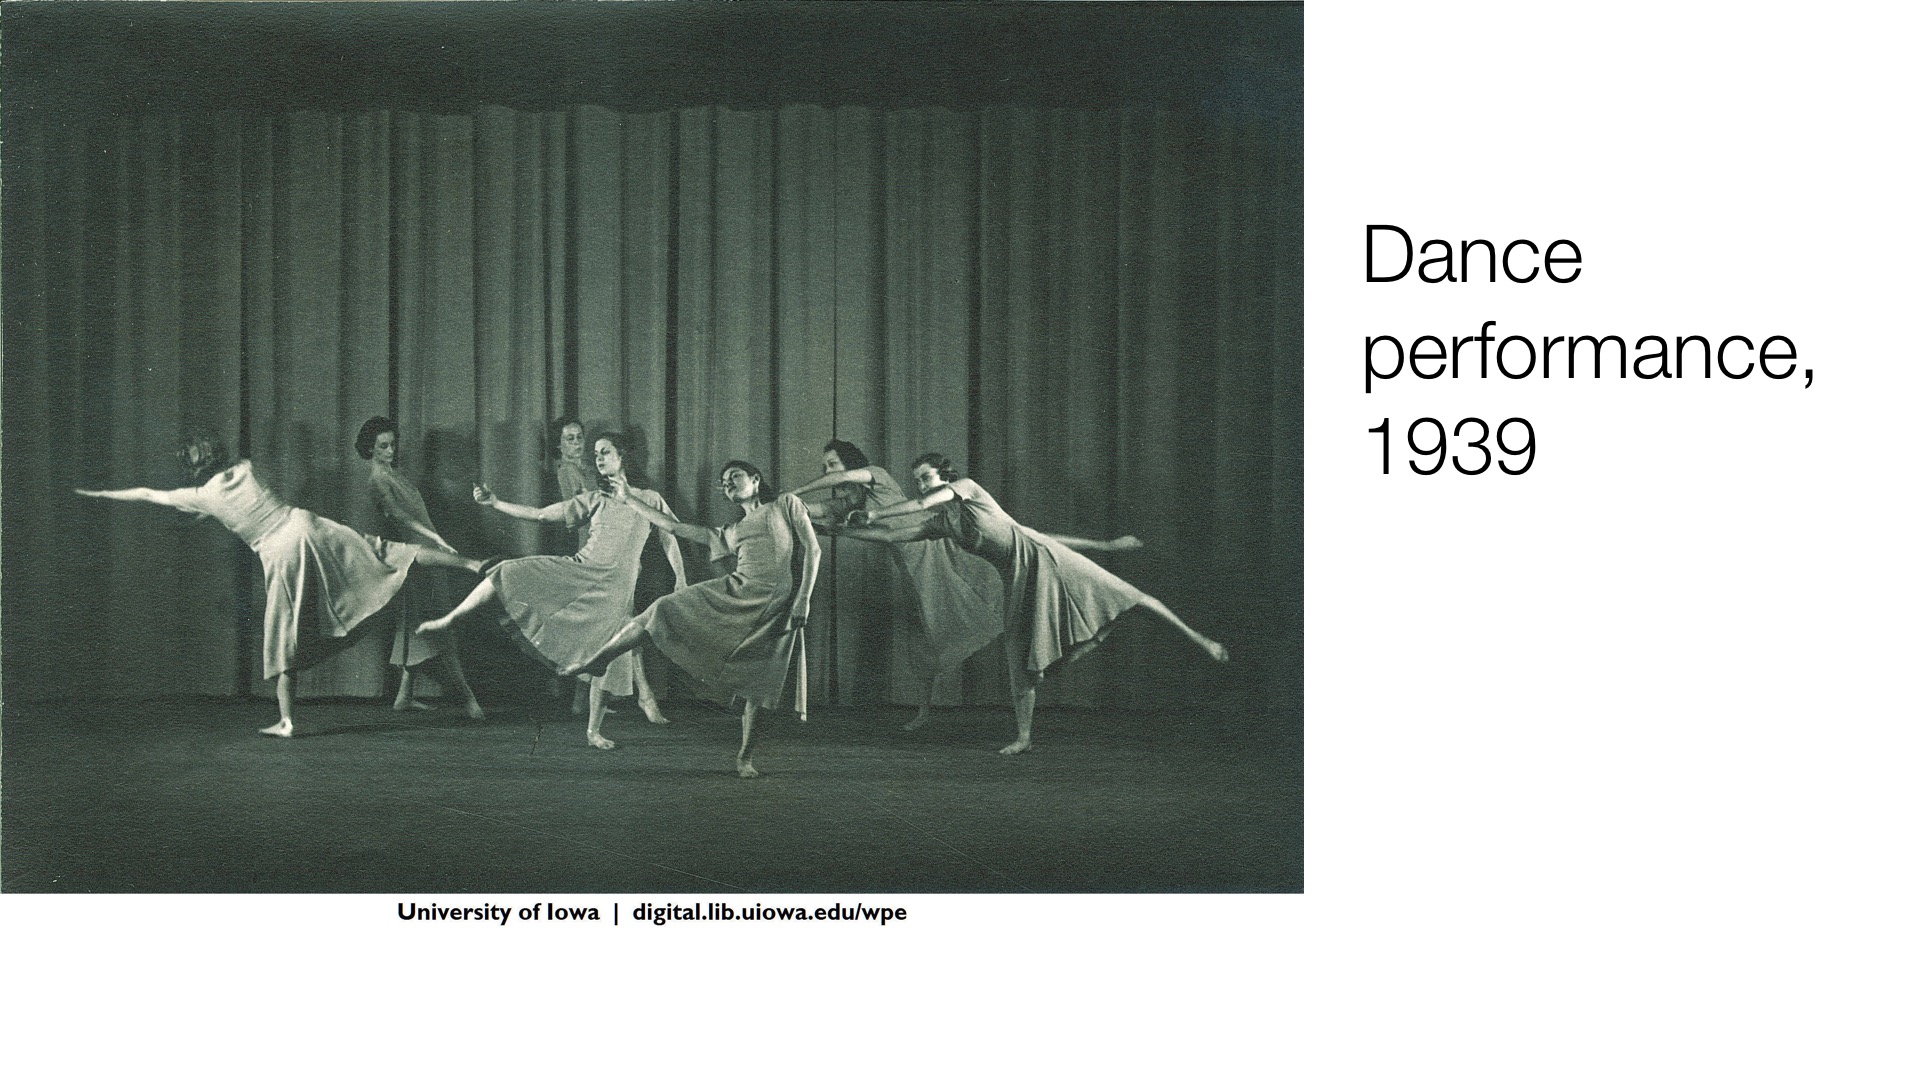 dance performance, 1939